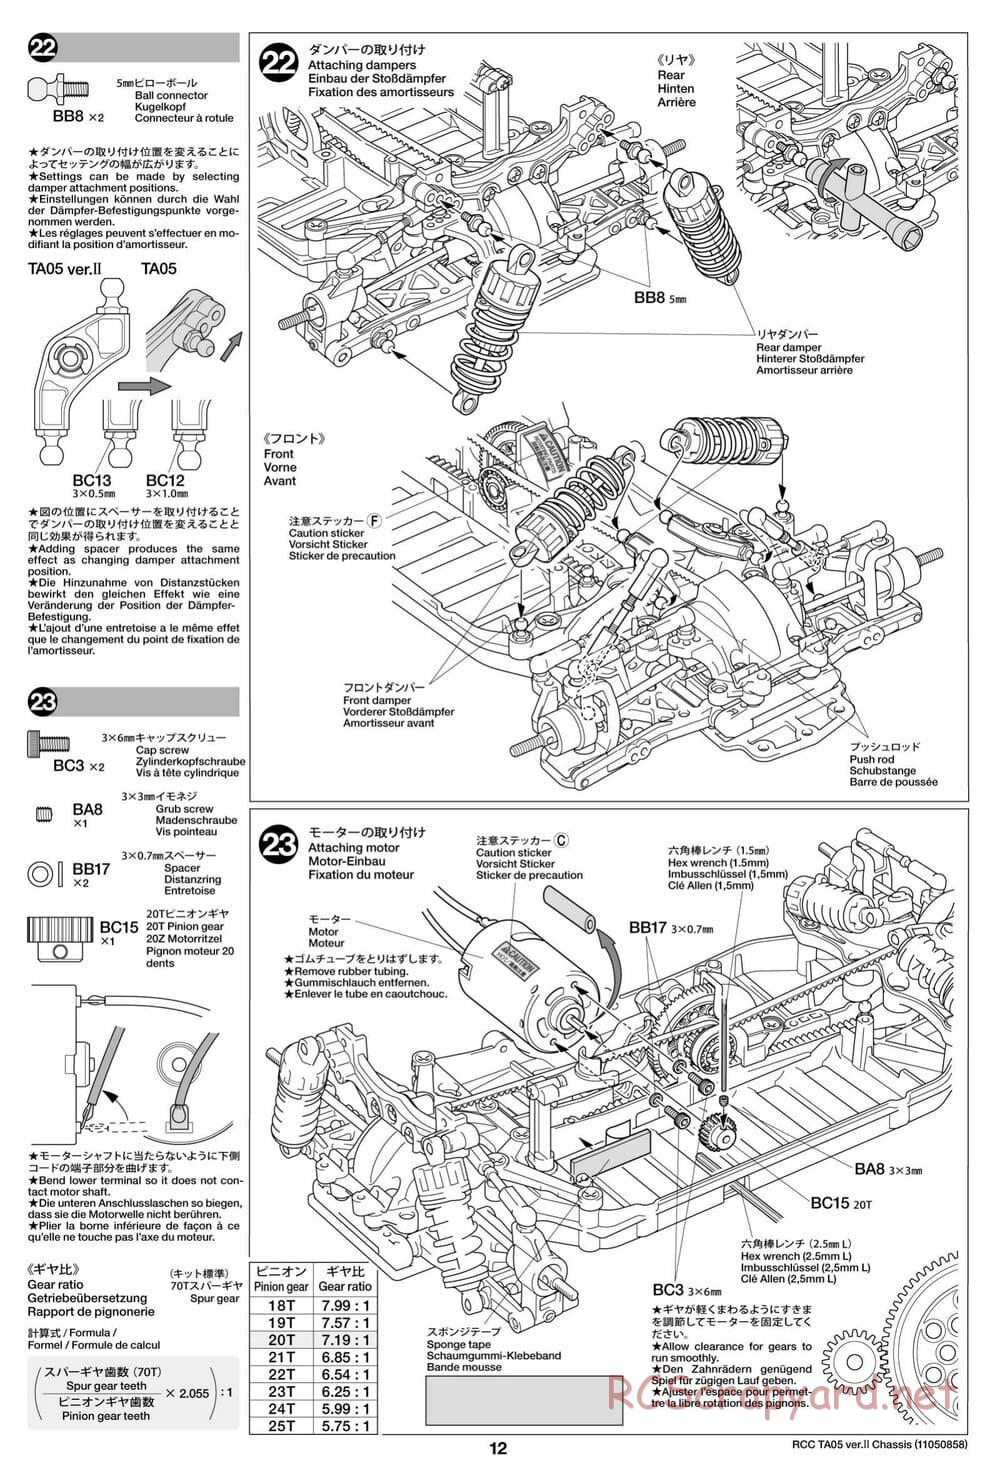 Tamiya - TA05 Ver.II Chassis - Manual - Page 12